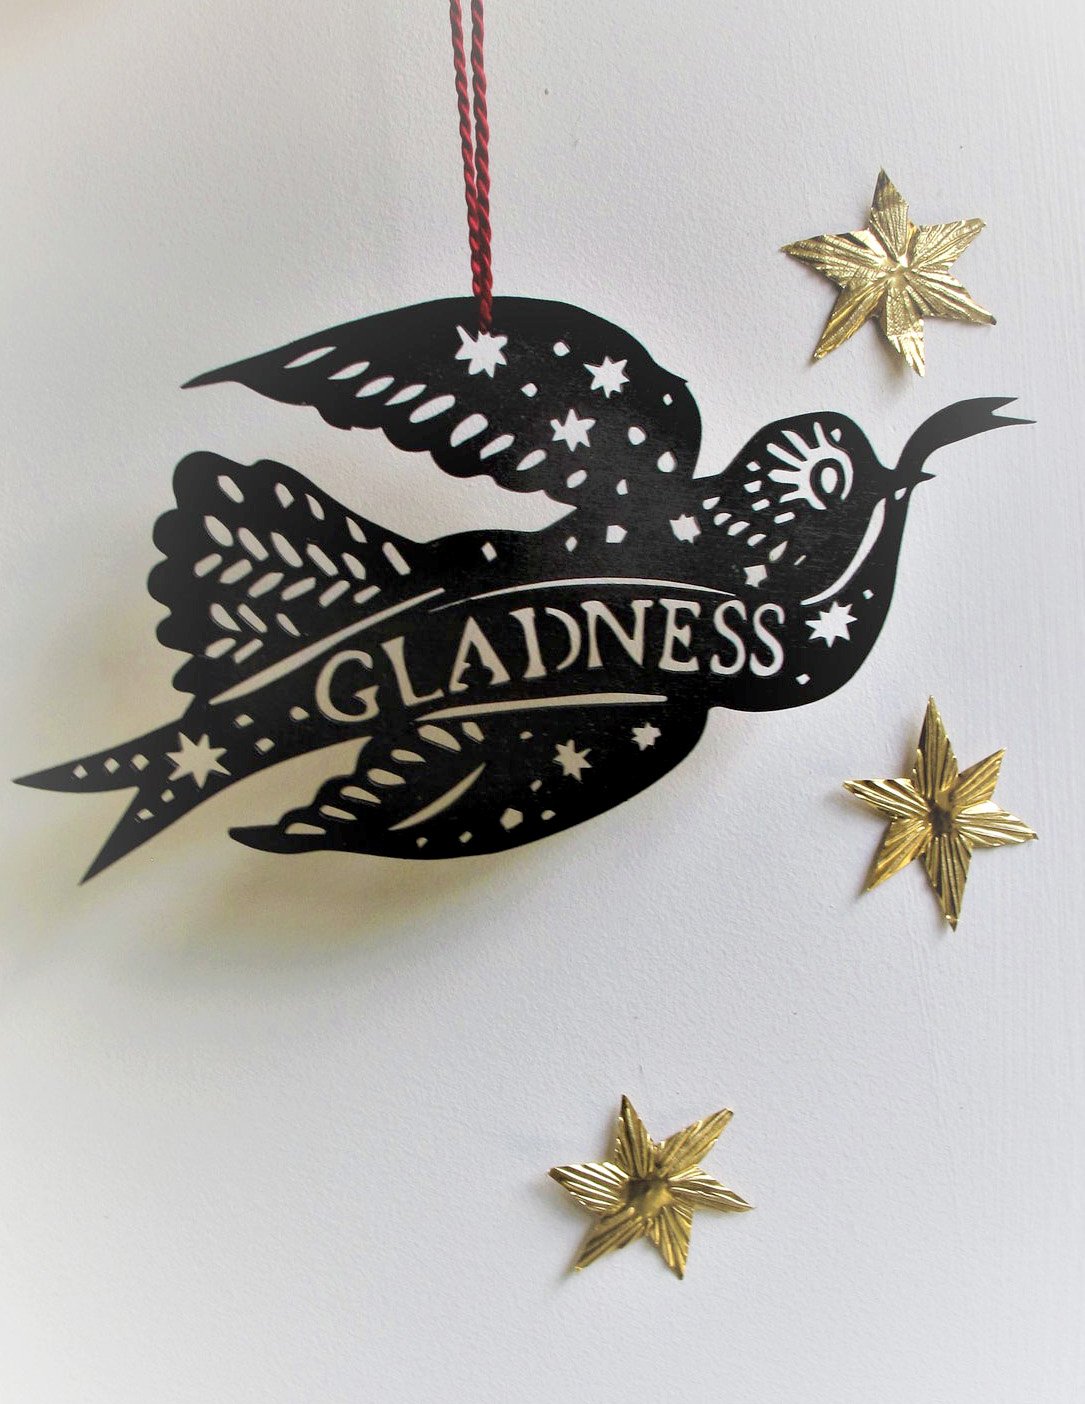 Gladness Bird Hanging Decoration - £18 - Amy Swann